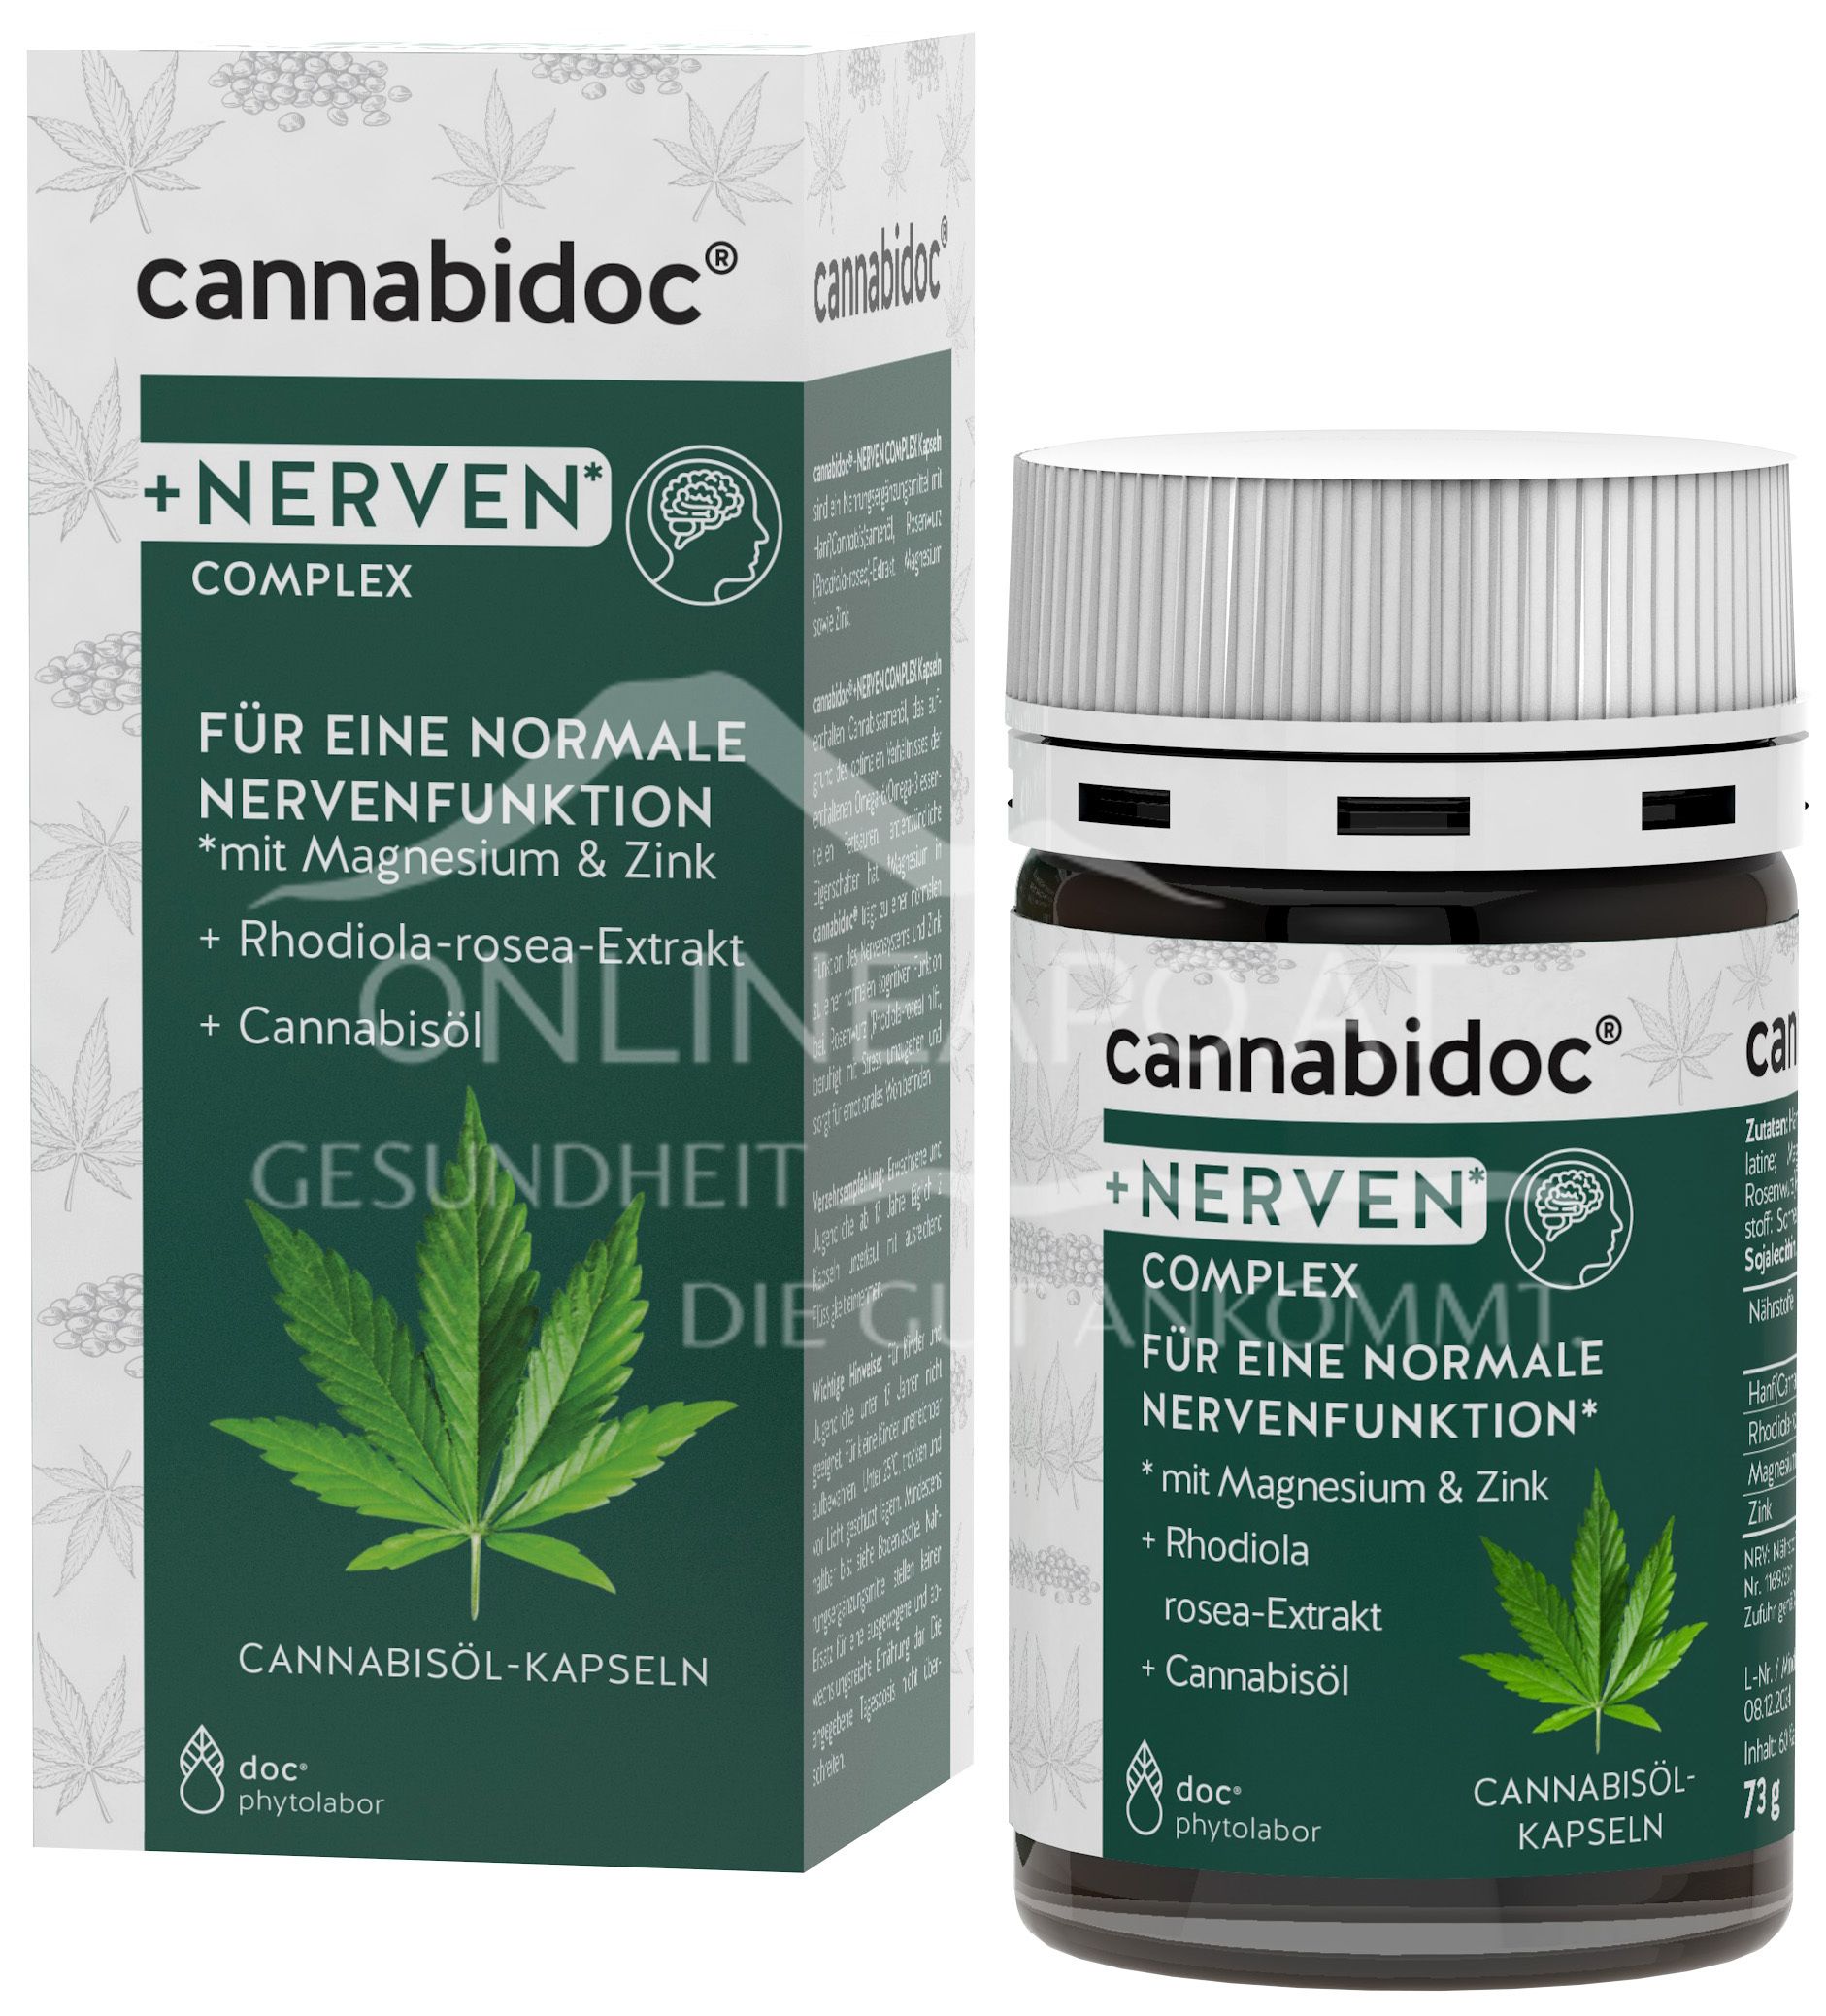 cannabidoc® + Nerven* Complex Kapseln